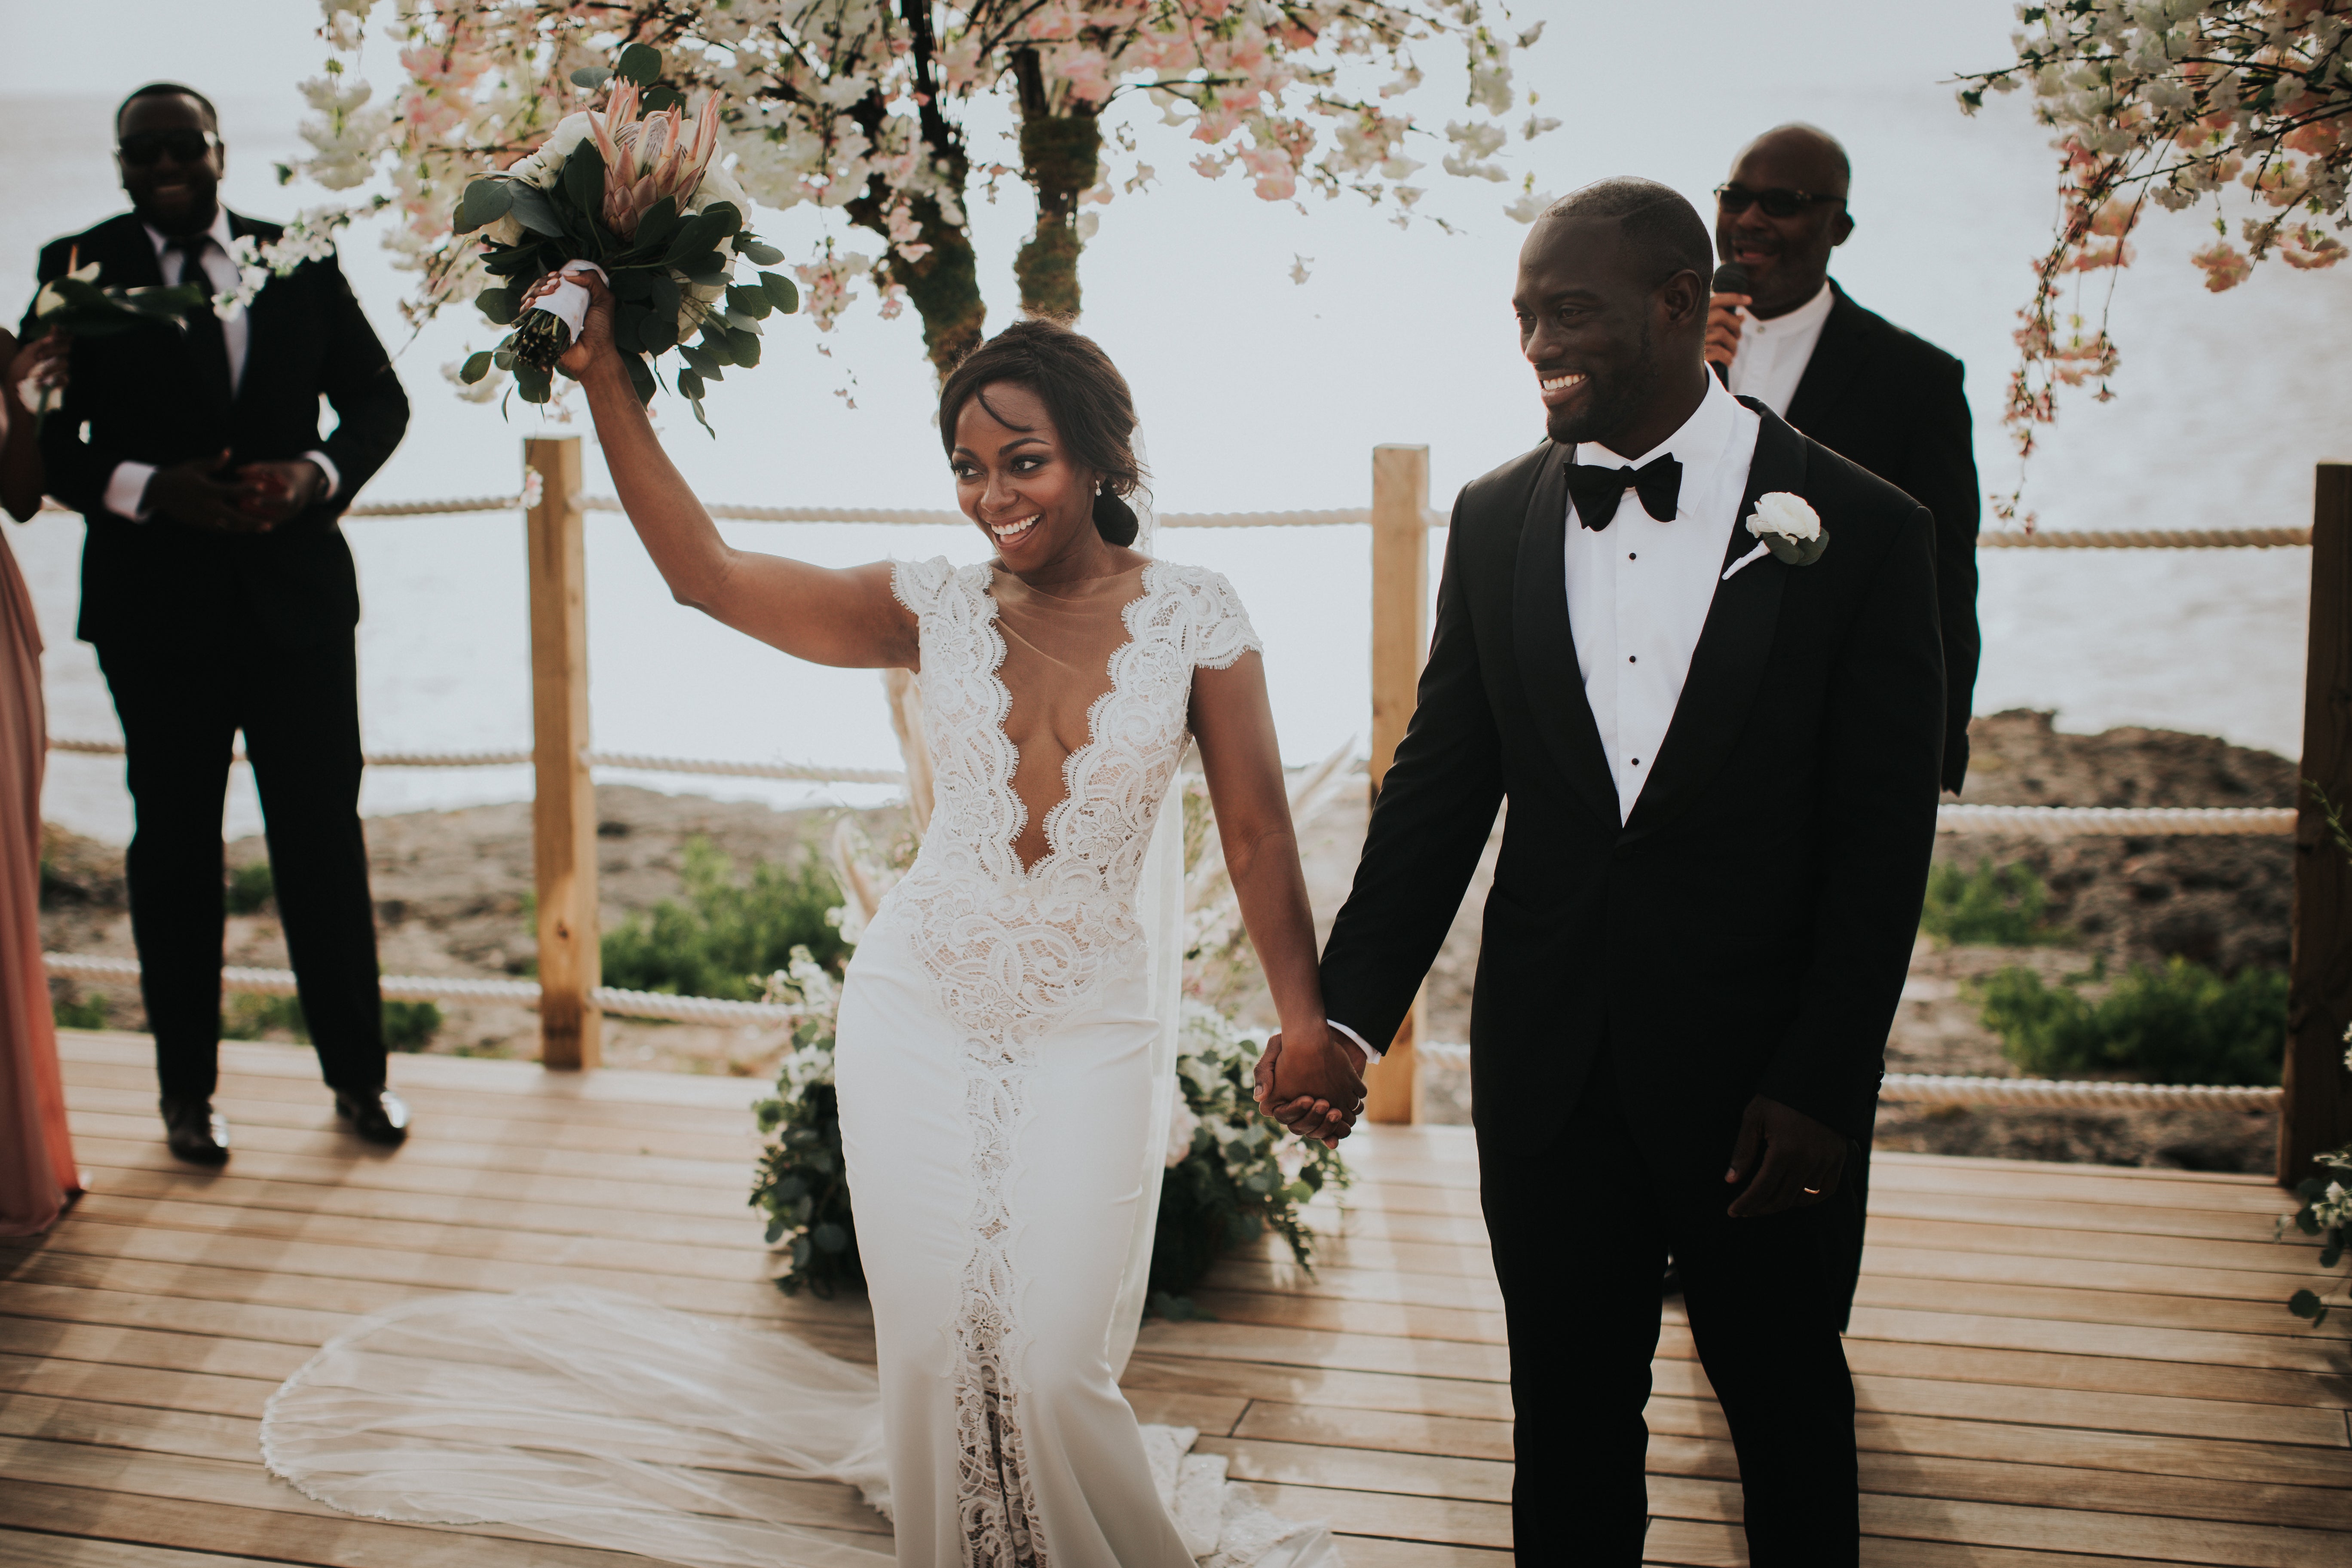 Bridal Bliss: Herlene and Khari's Tropical Affair in Anguilla Was Breathtaking